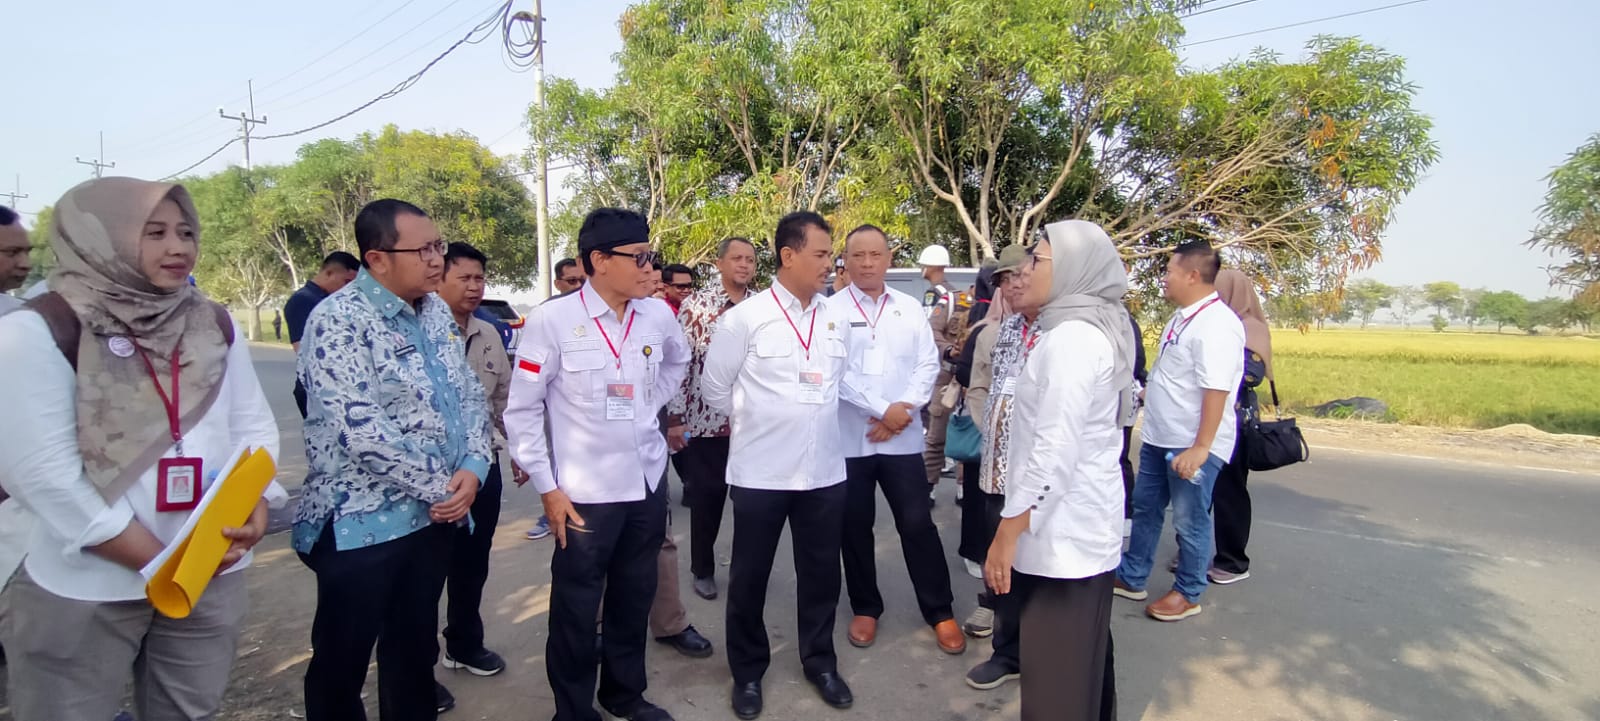 BREAKING NEWS: Presiden Jokowi Dijadwalkan Panen Raya di Indramayu 